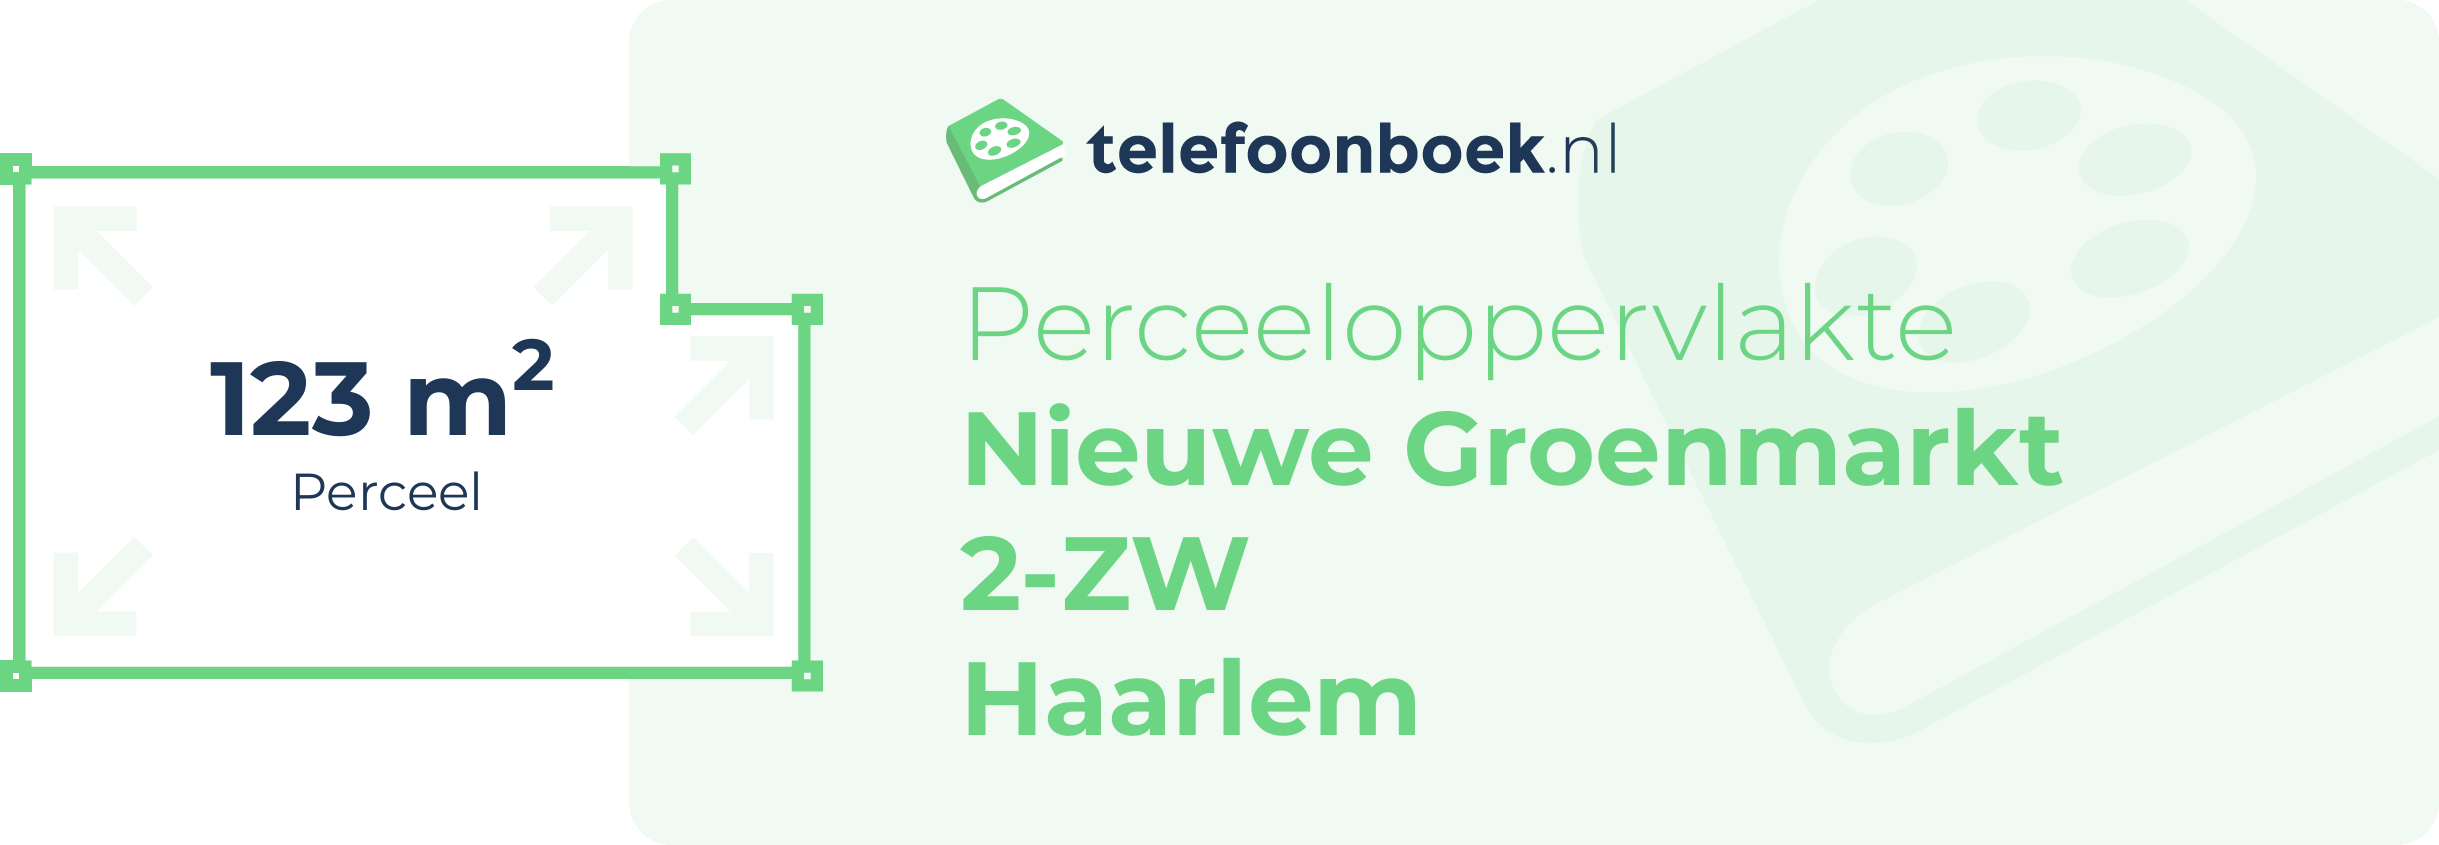 Perceeloppervlakte Nieuwe Groenmarkt 2-ZW Haarlem